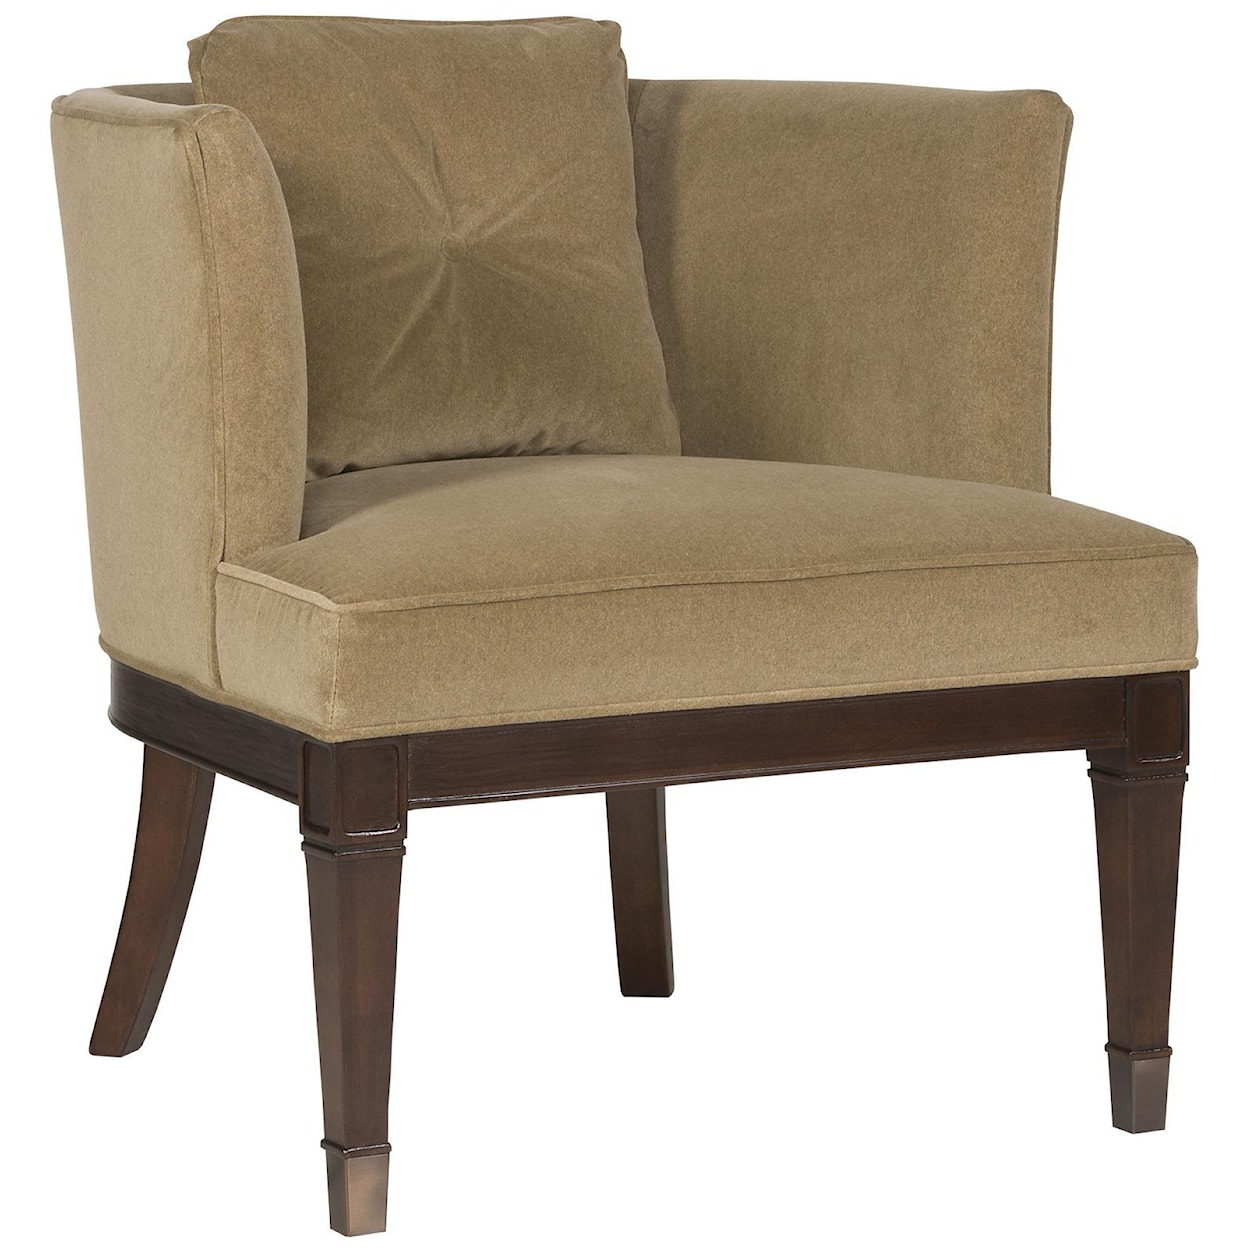 Vanguard Furniture Accent Chairs Chair